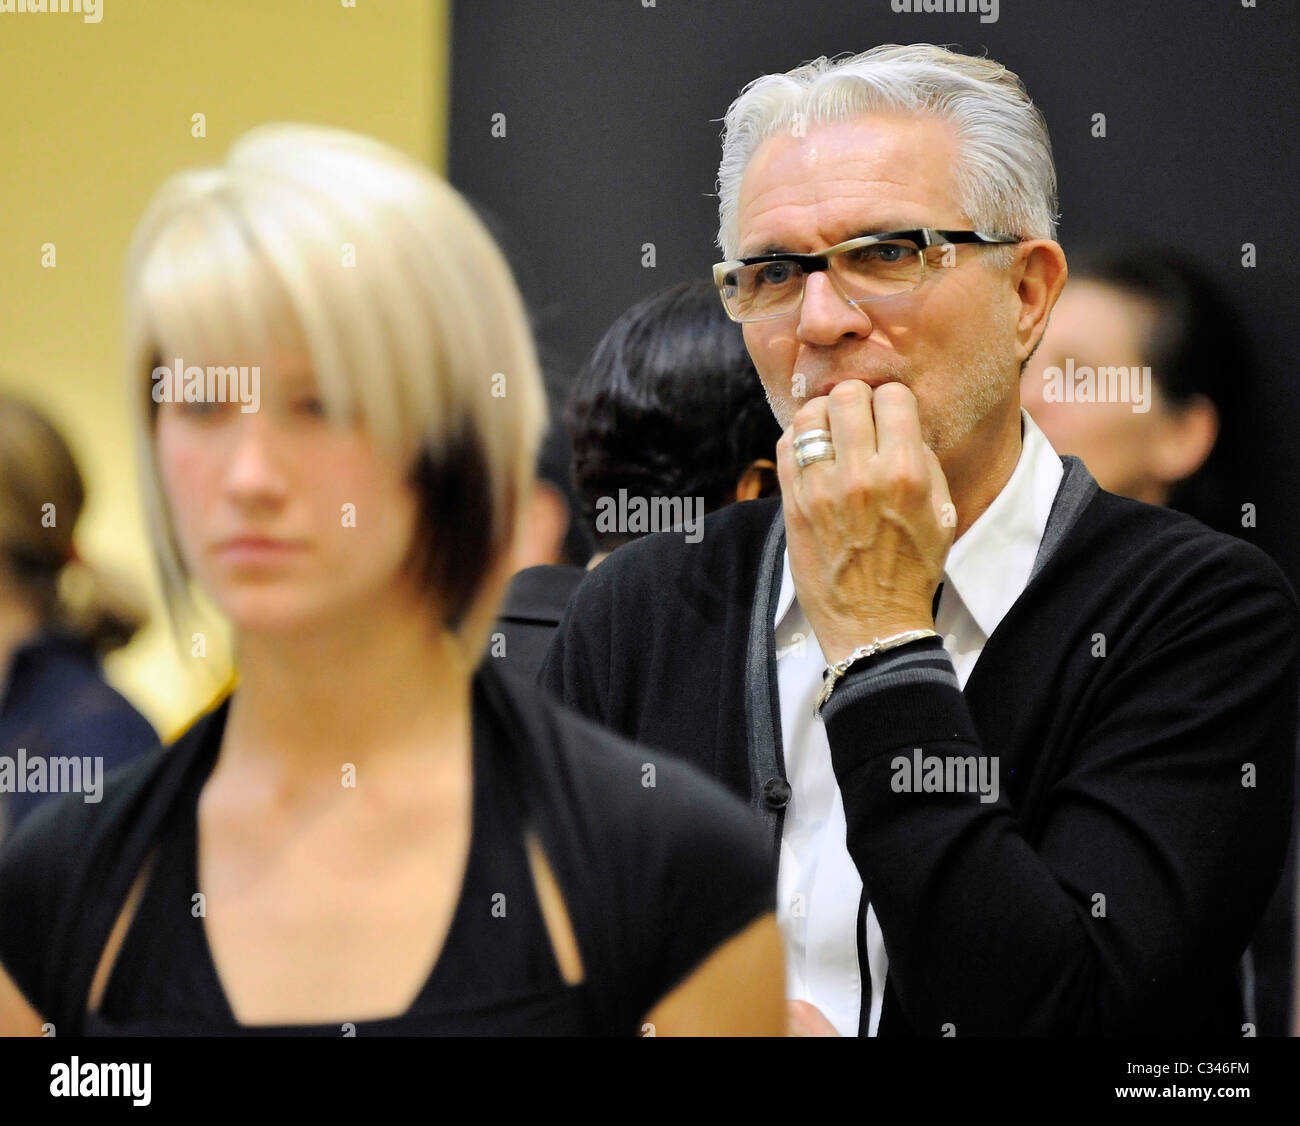 Elmer Olsen hosts Canada's Next Top Model casting call at Fairview Mall Toronto, Canada - 23.01.09 Stock Photo